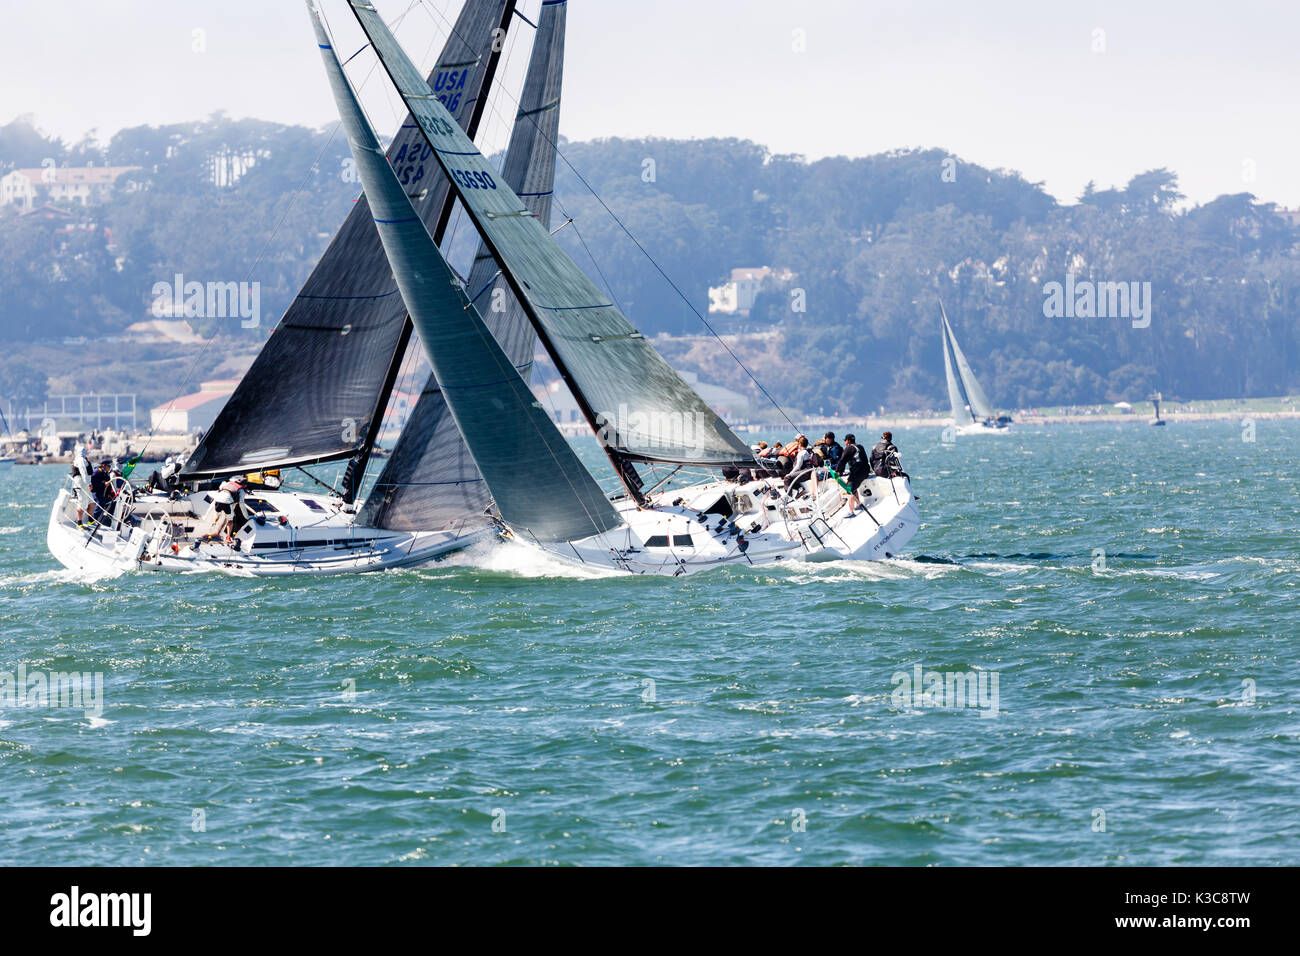 Two sailboats collide during regatta in San Francisco Bay Stock Photo